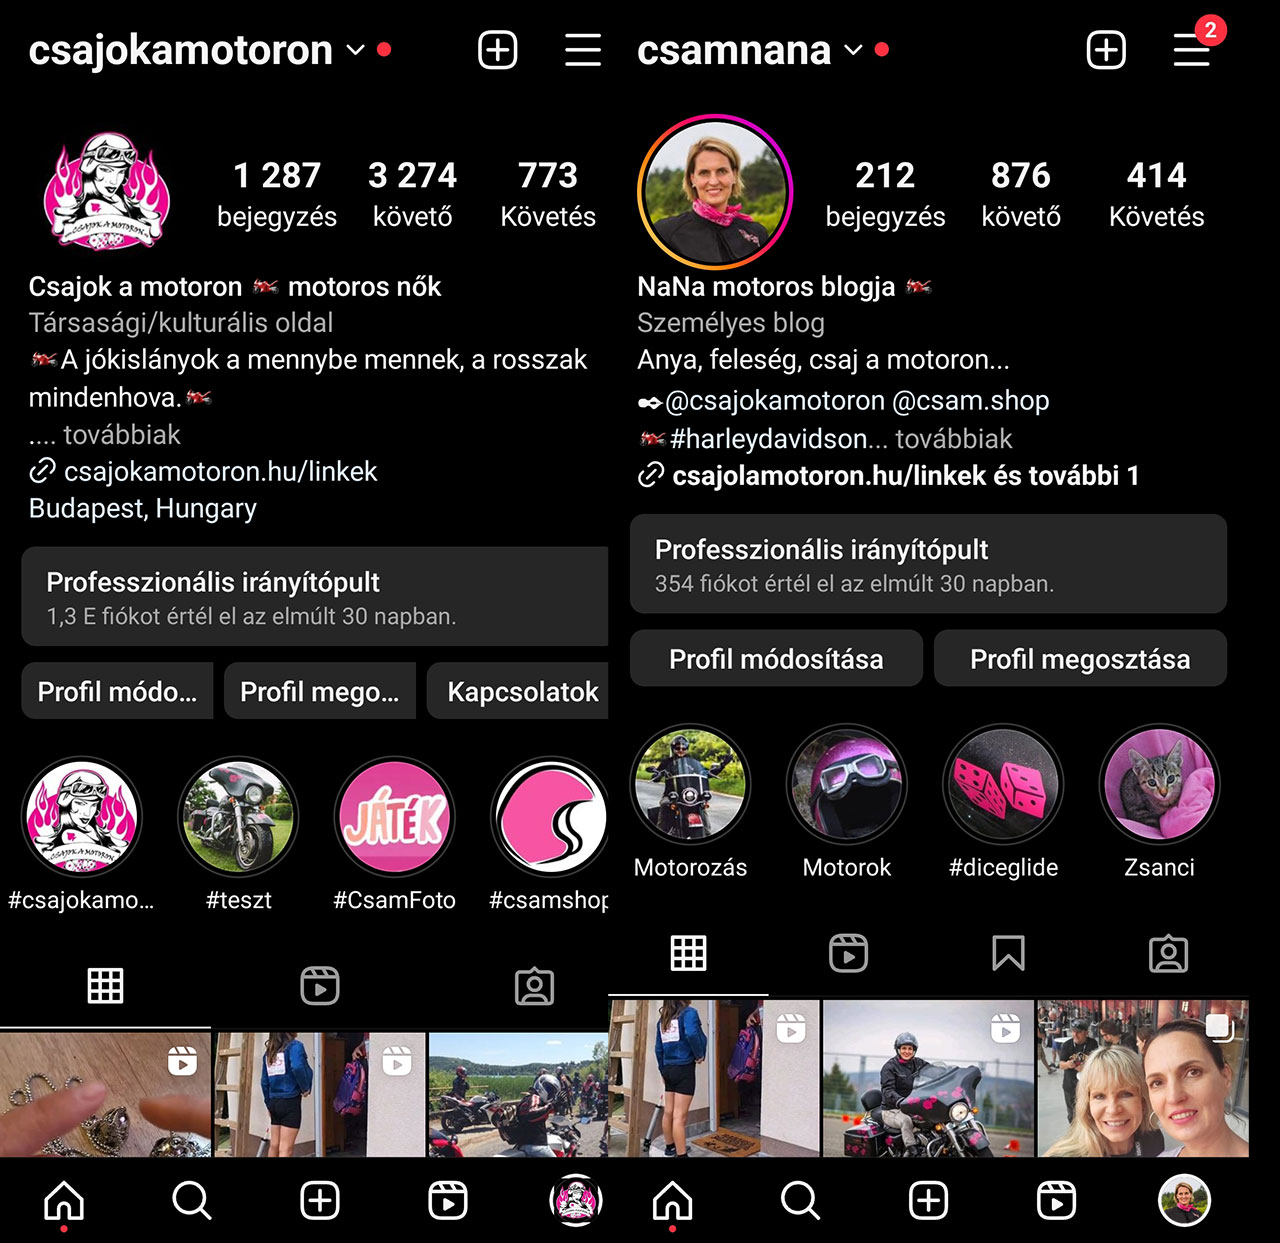 Csajokamotoron csamnana instagram profil